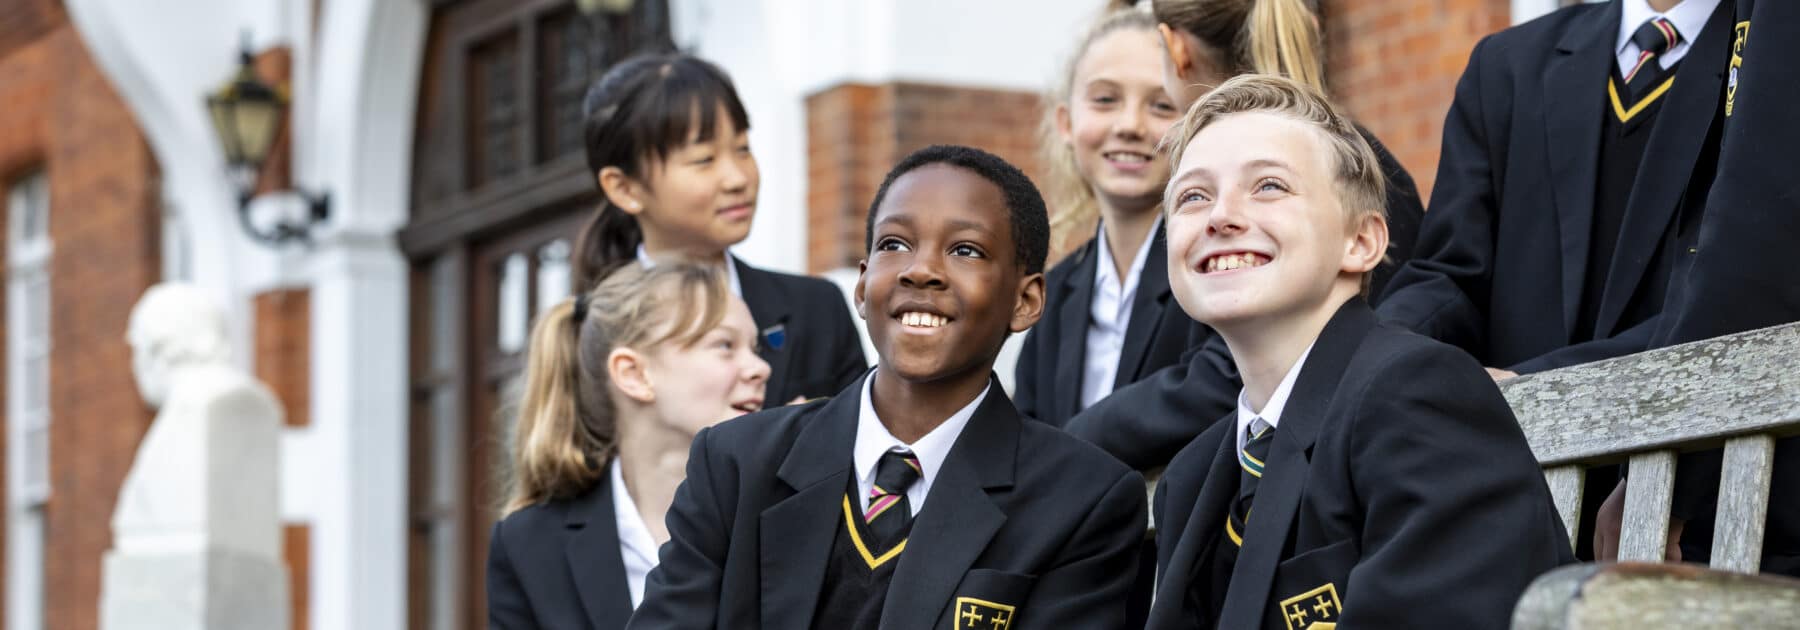 Flair Impact, Caterham School Shares Best Practice